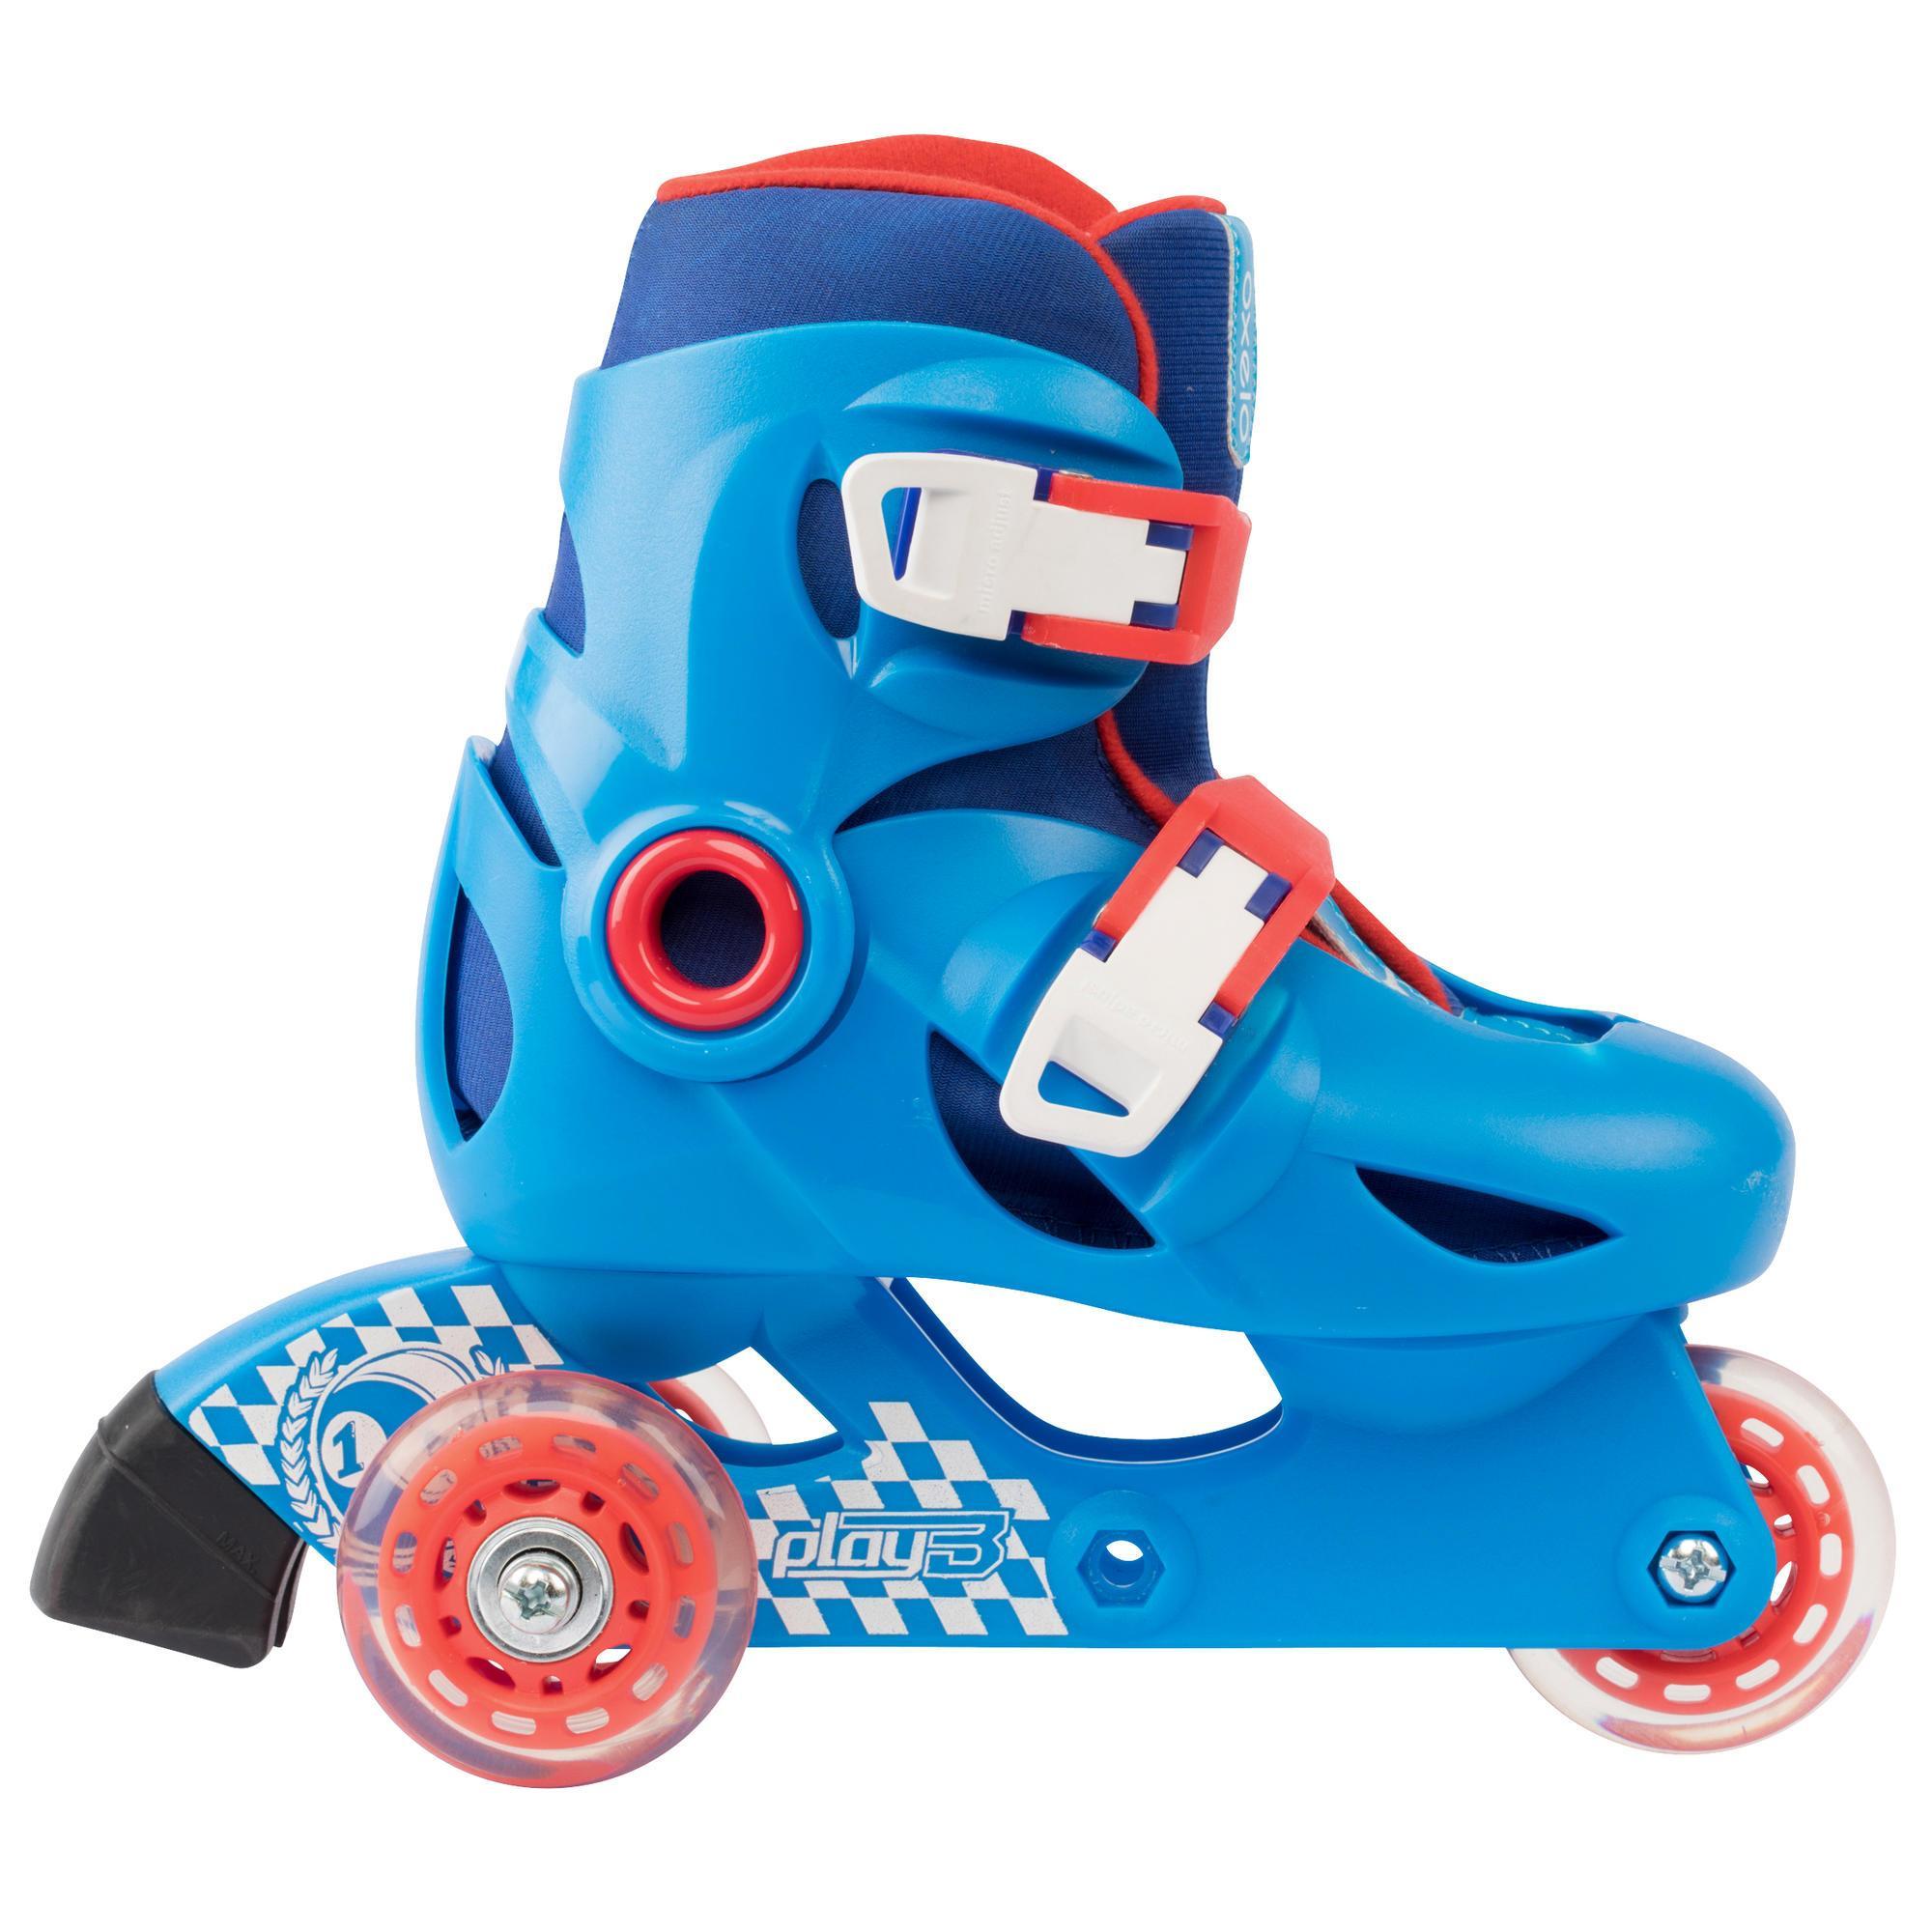 Play 3 Kids' Skates - Blue/Red - Decathlon